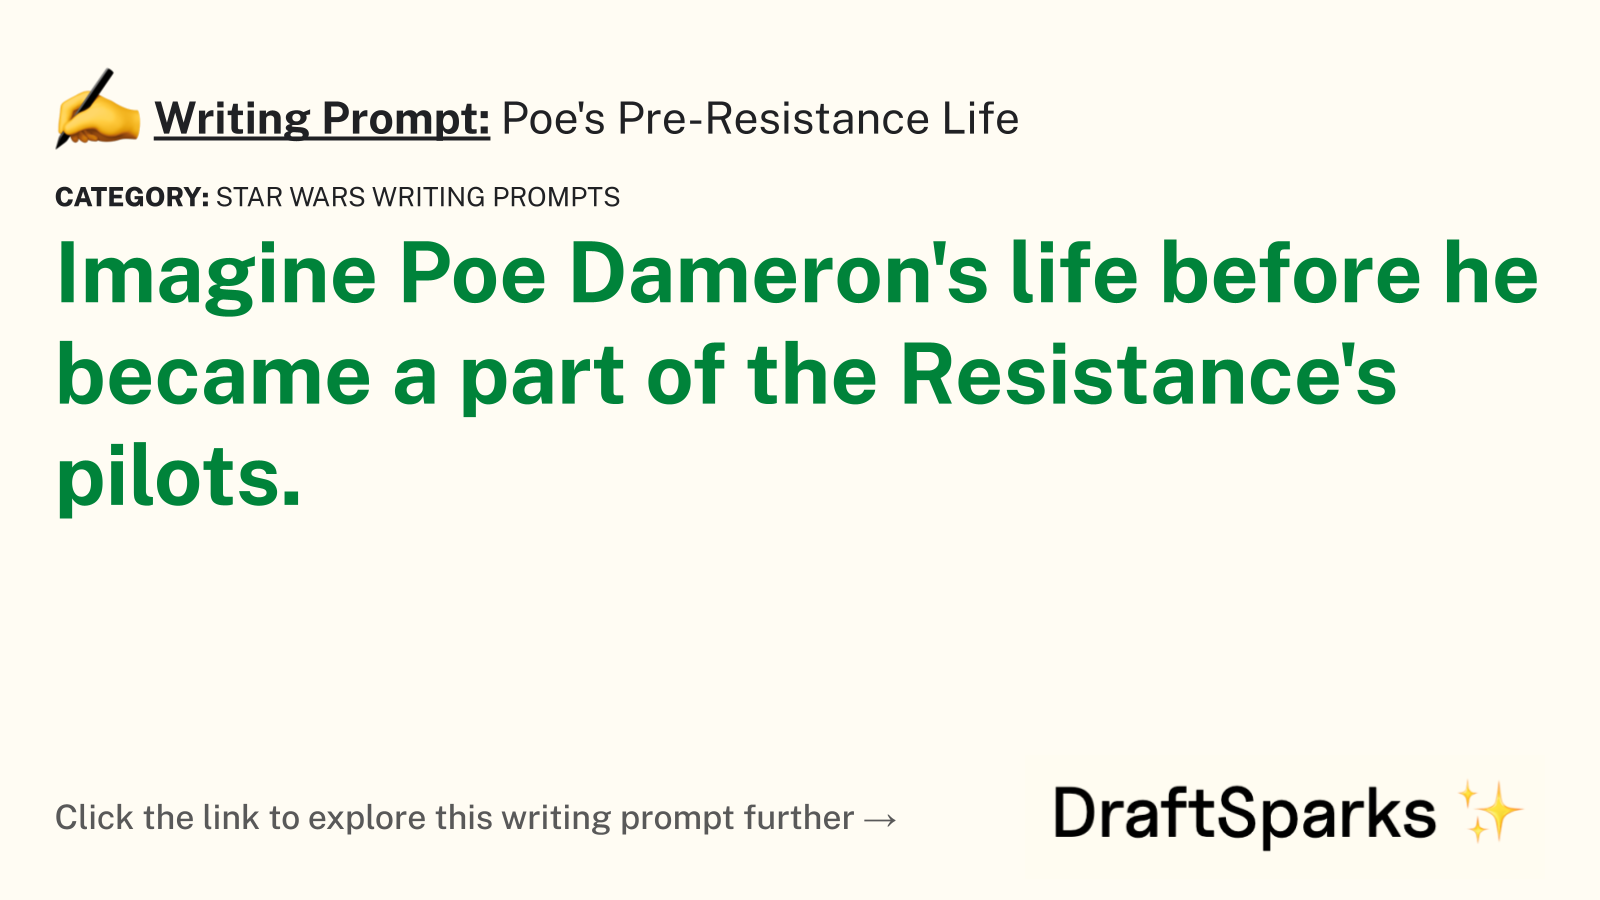 Poe’s Pre-Resistance Life